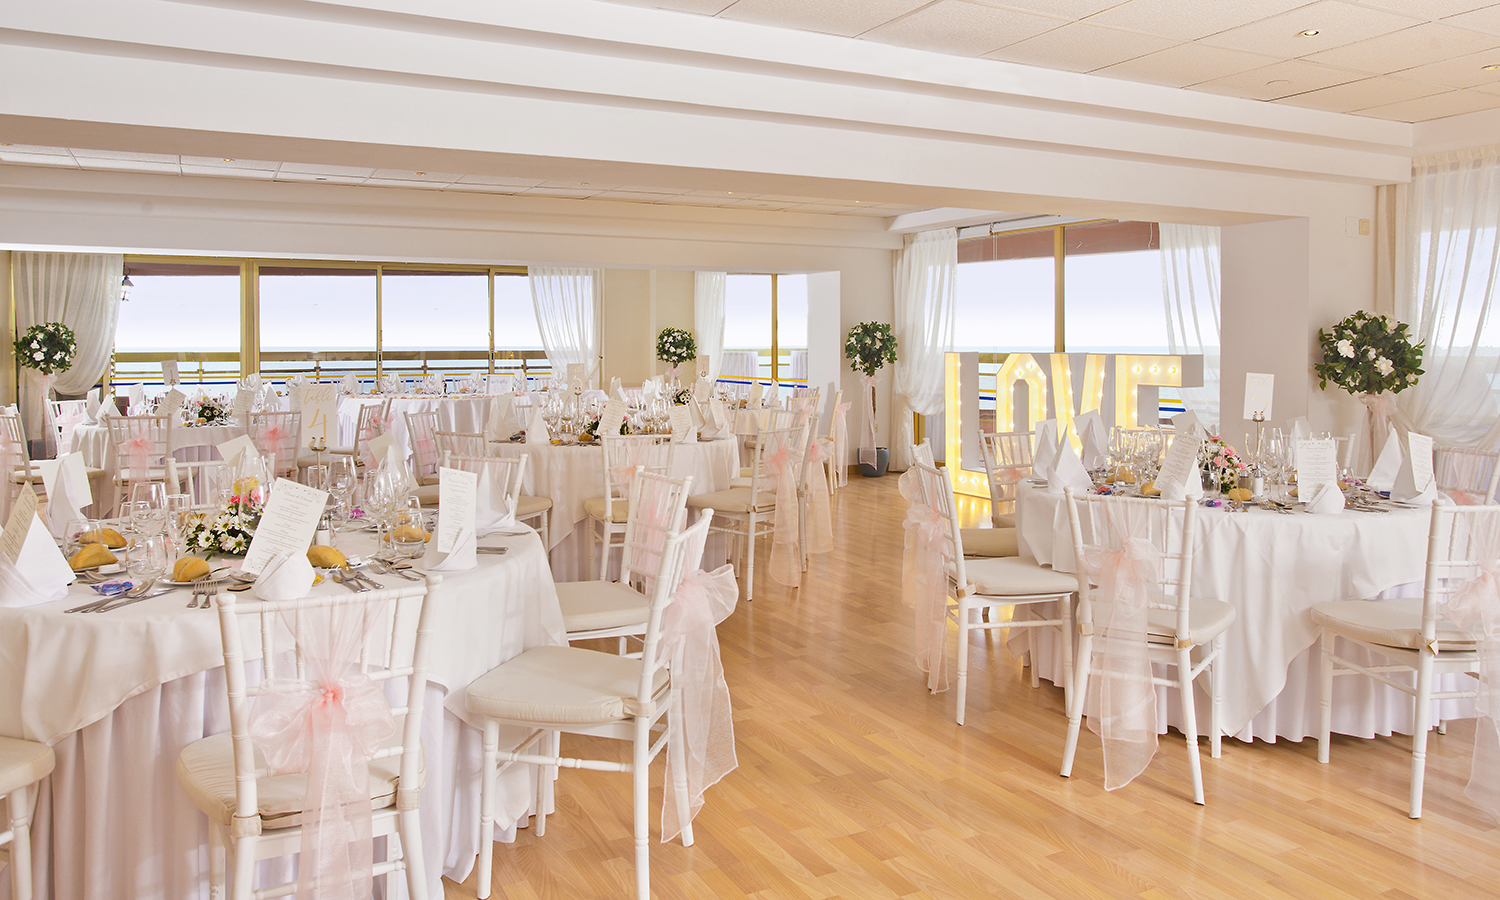 Sala Málaga - Banquet room ready for a Wedding